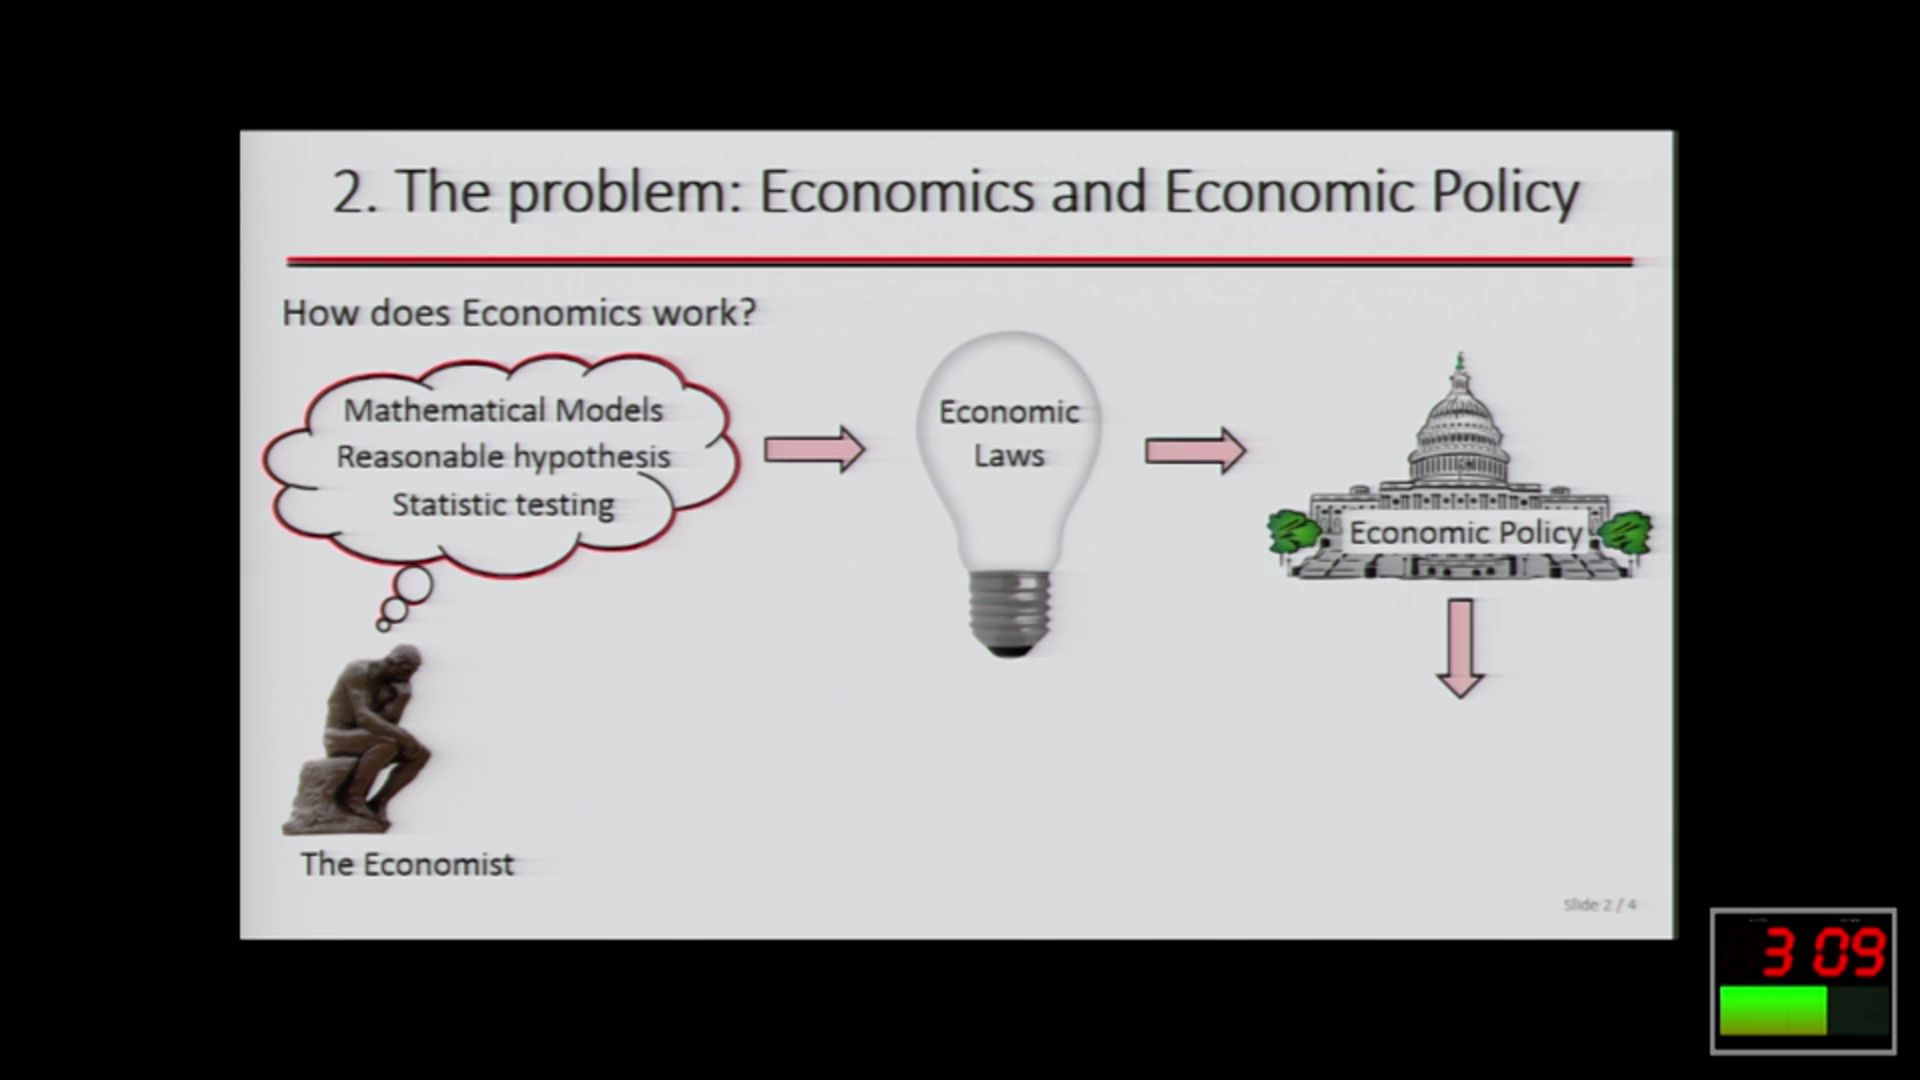 Critique of economic policy